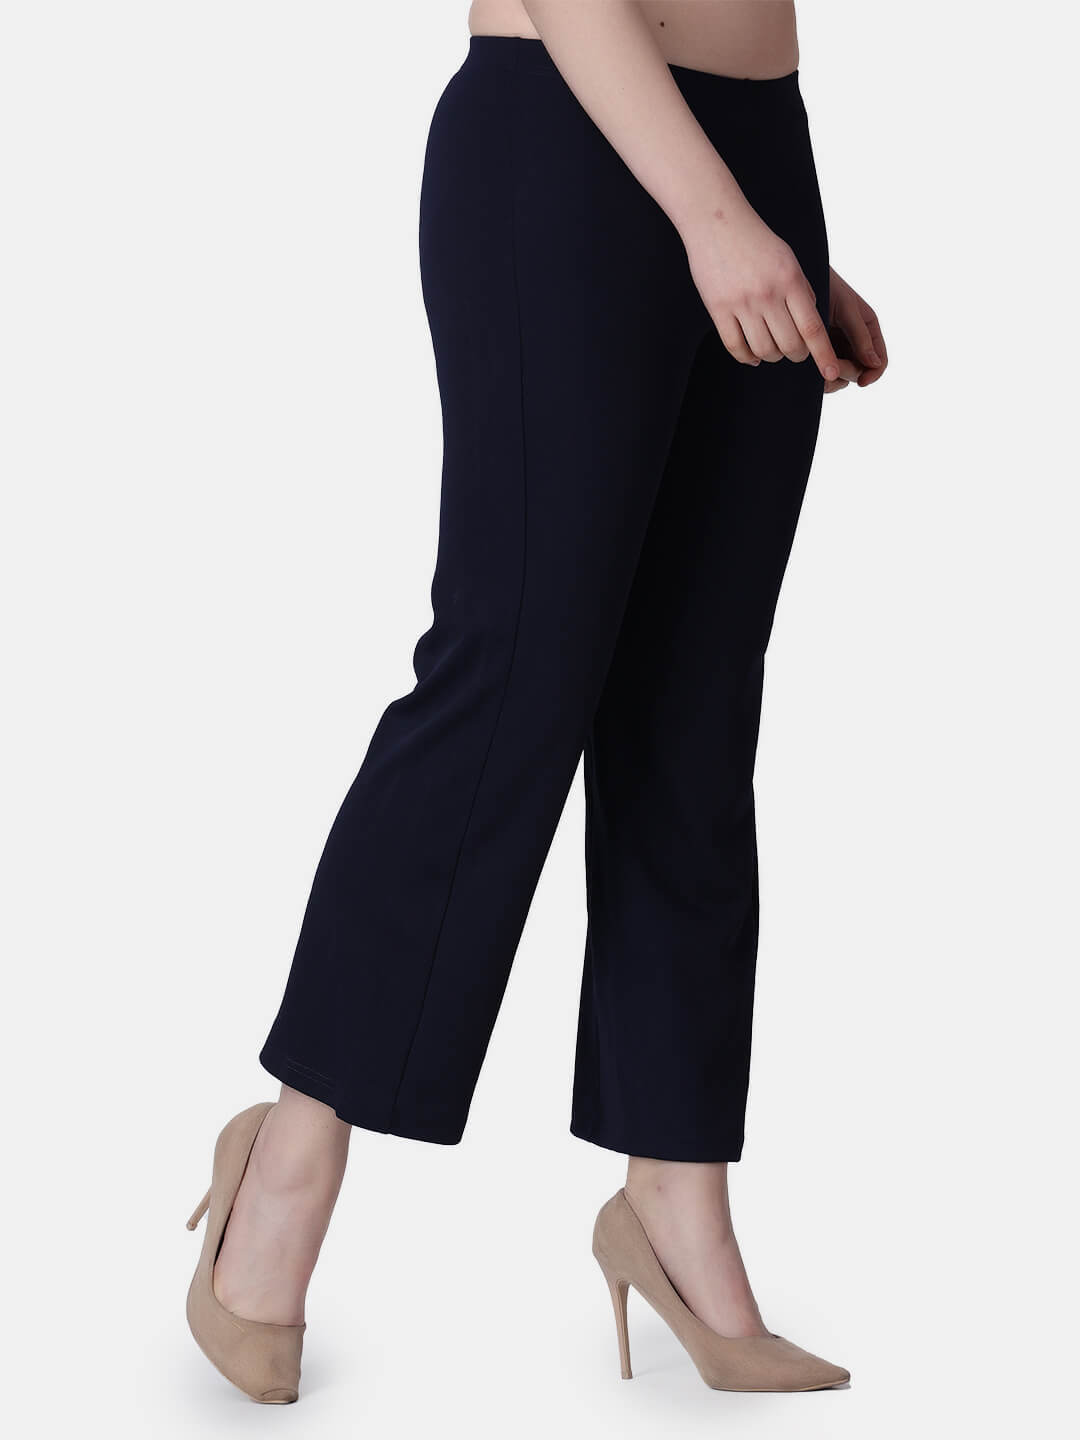 Popwings Women Casual Navy Blue Solid Trouser